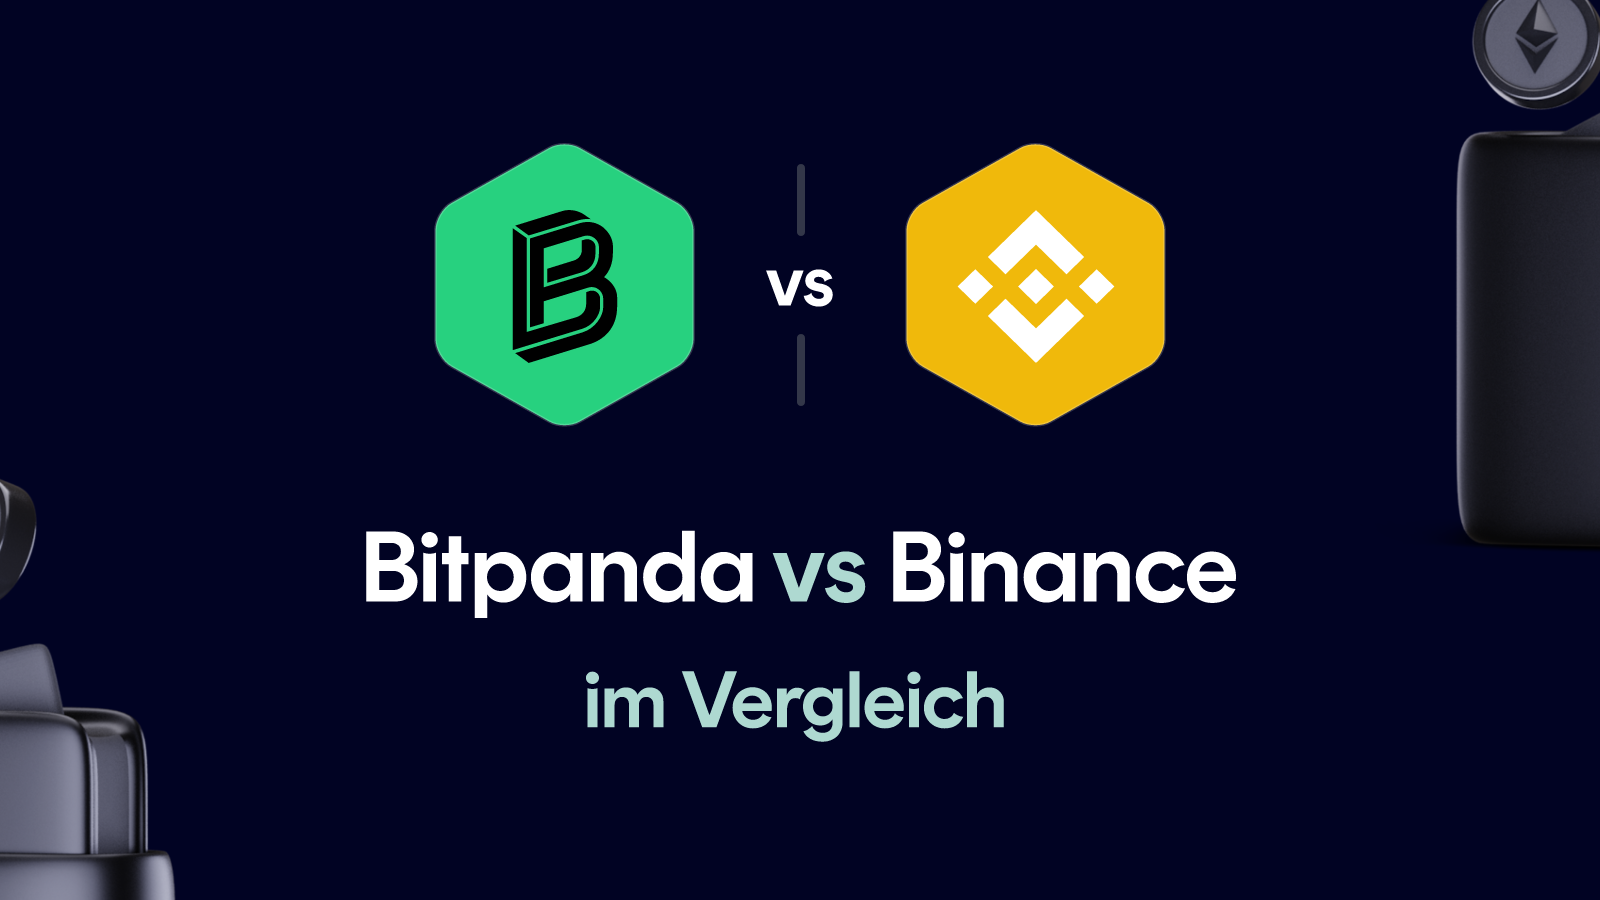 Bitpanda vs Binance im Vergleich